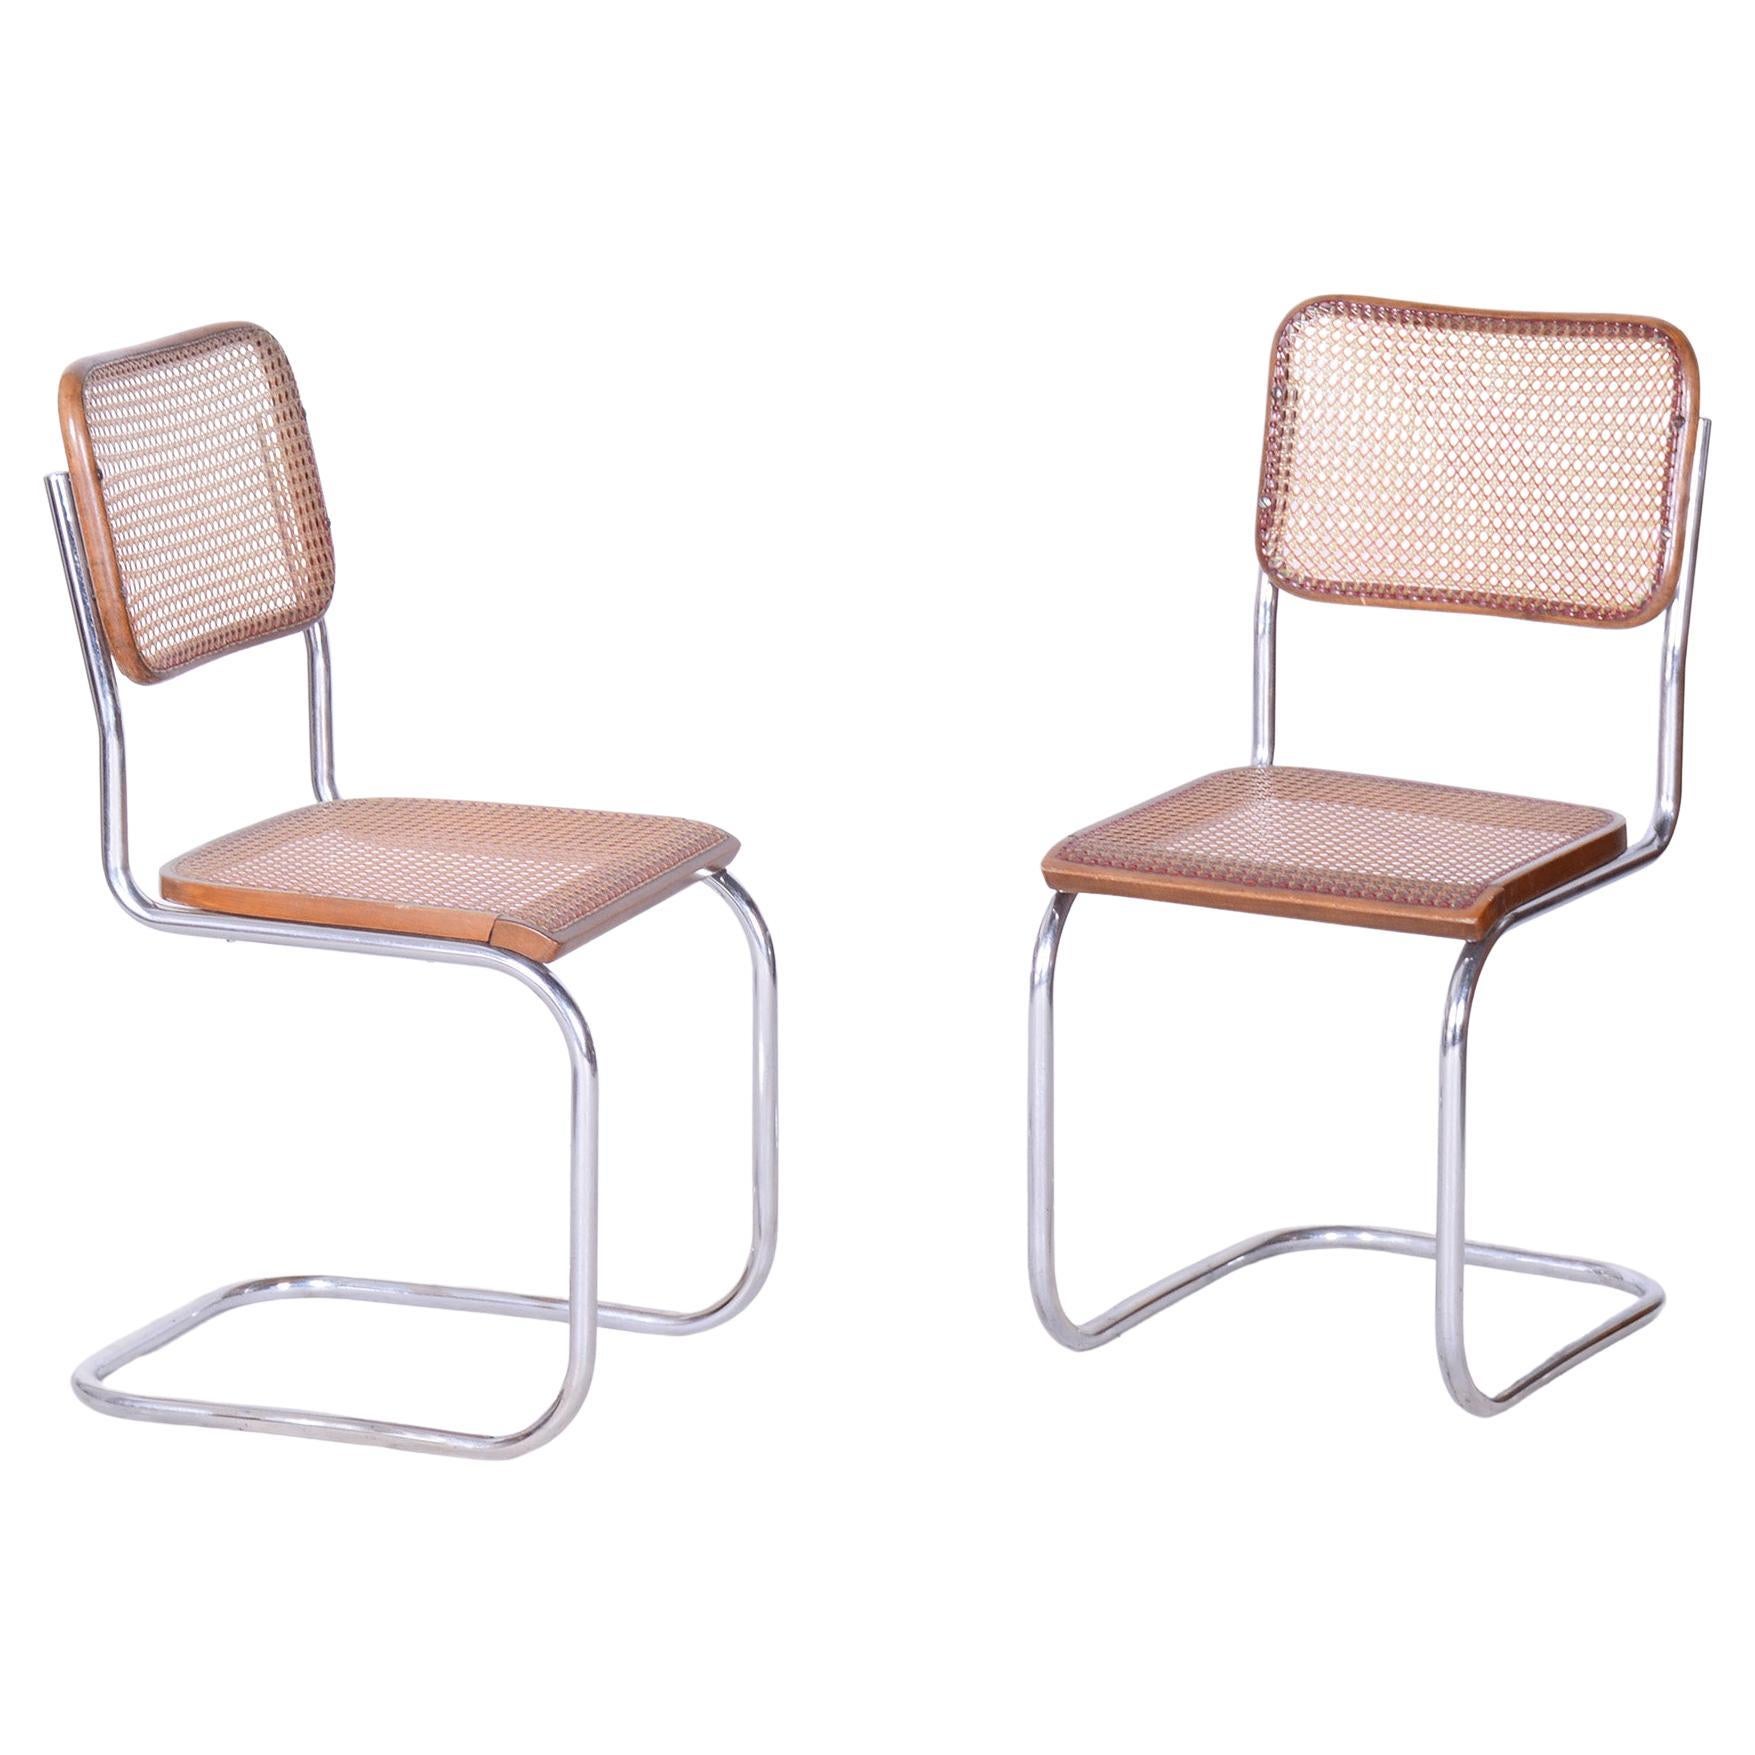 Restored Bauhaus Pair of Chairs, Robert Slezak, Chrome, Beech, Czechia, 1930s